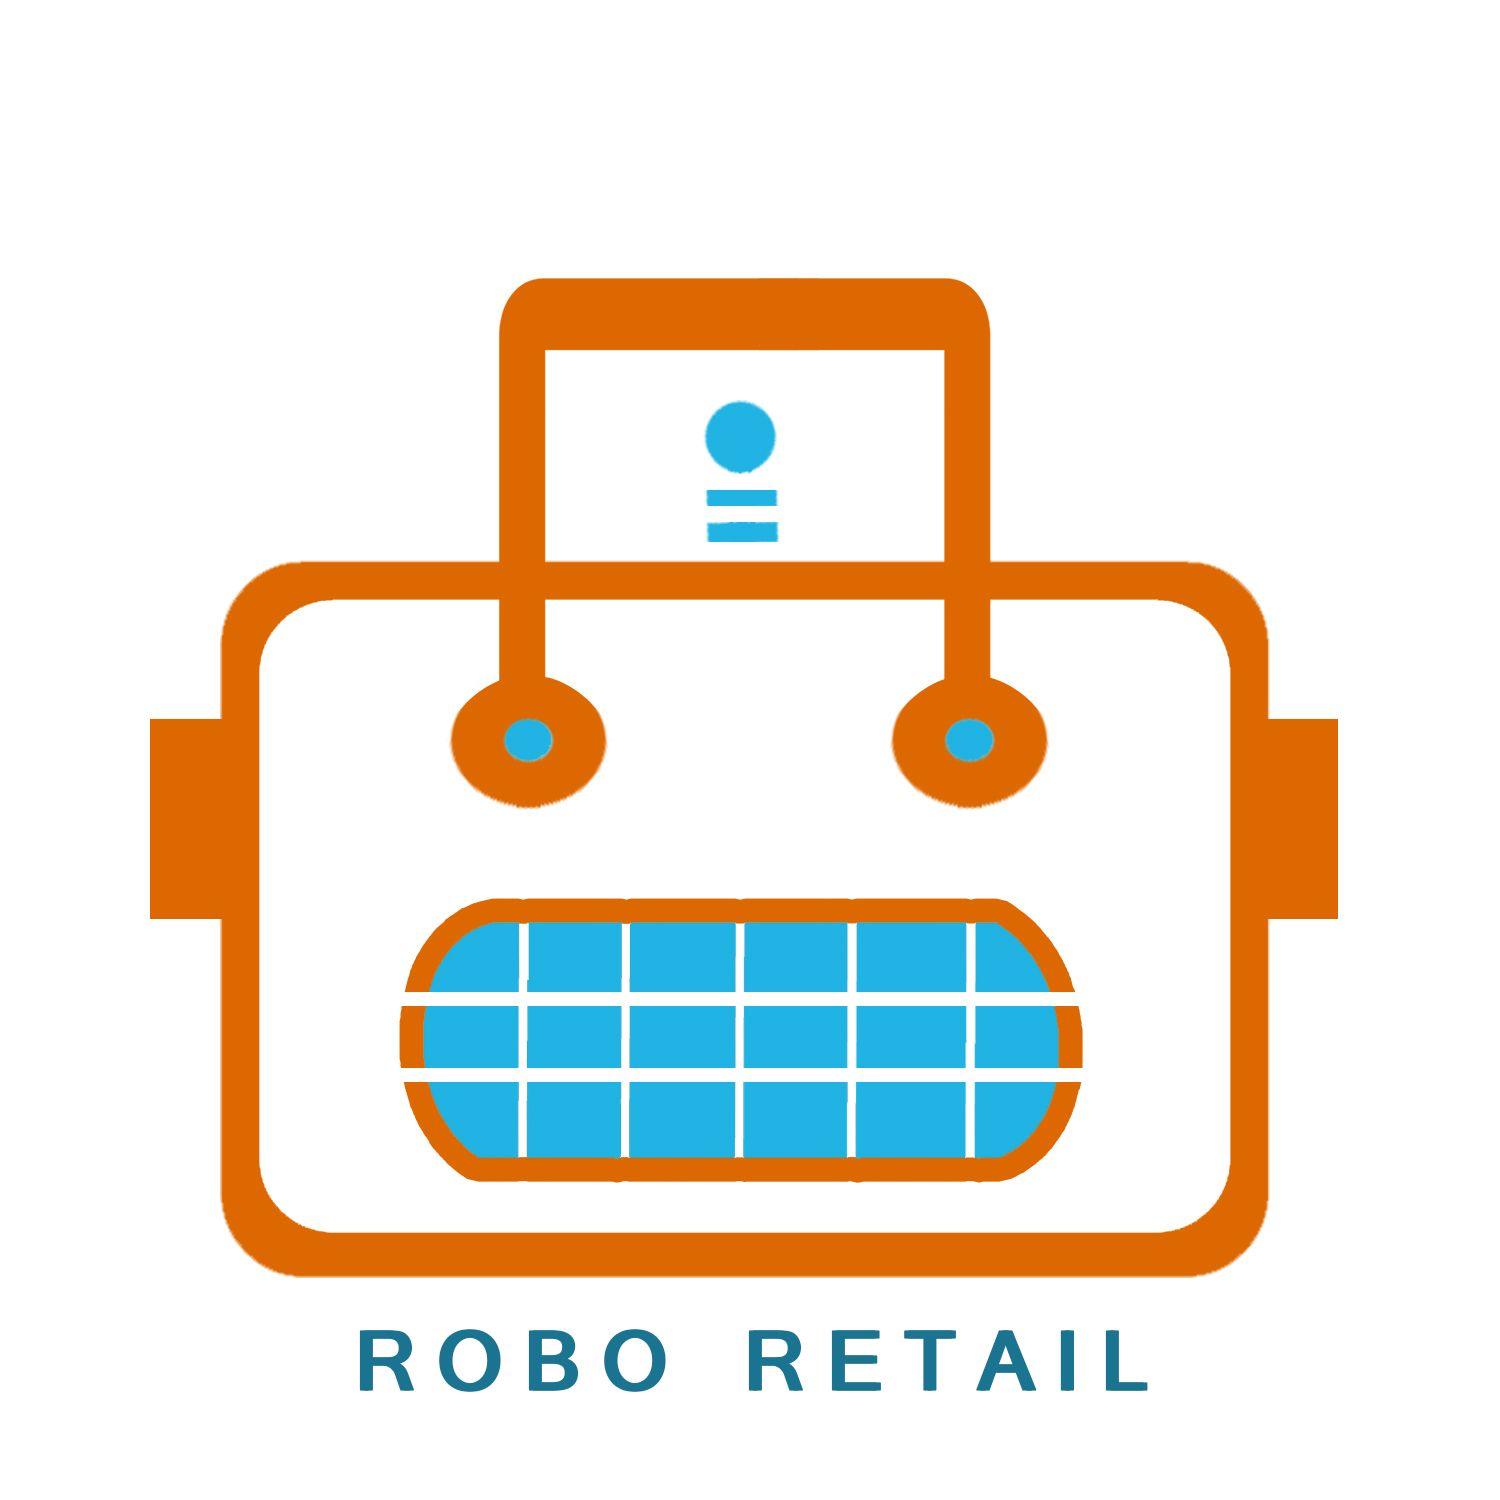 American Retail Company Logo - Modern, Upmarket, It Company Logo Design for Robo Retail